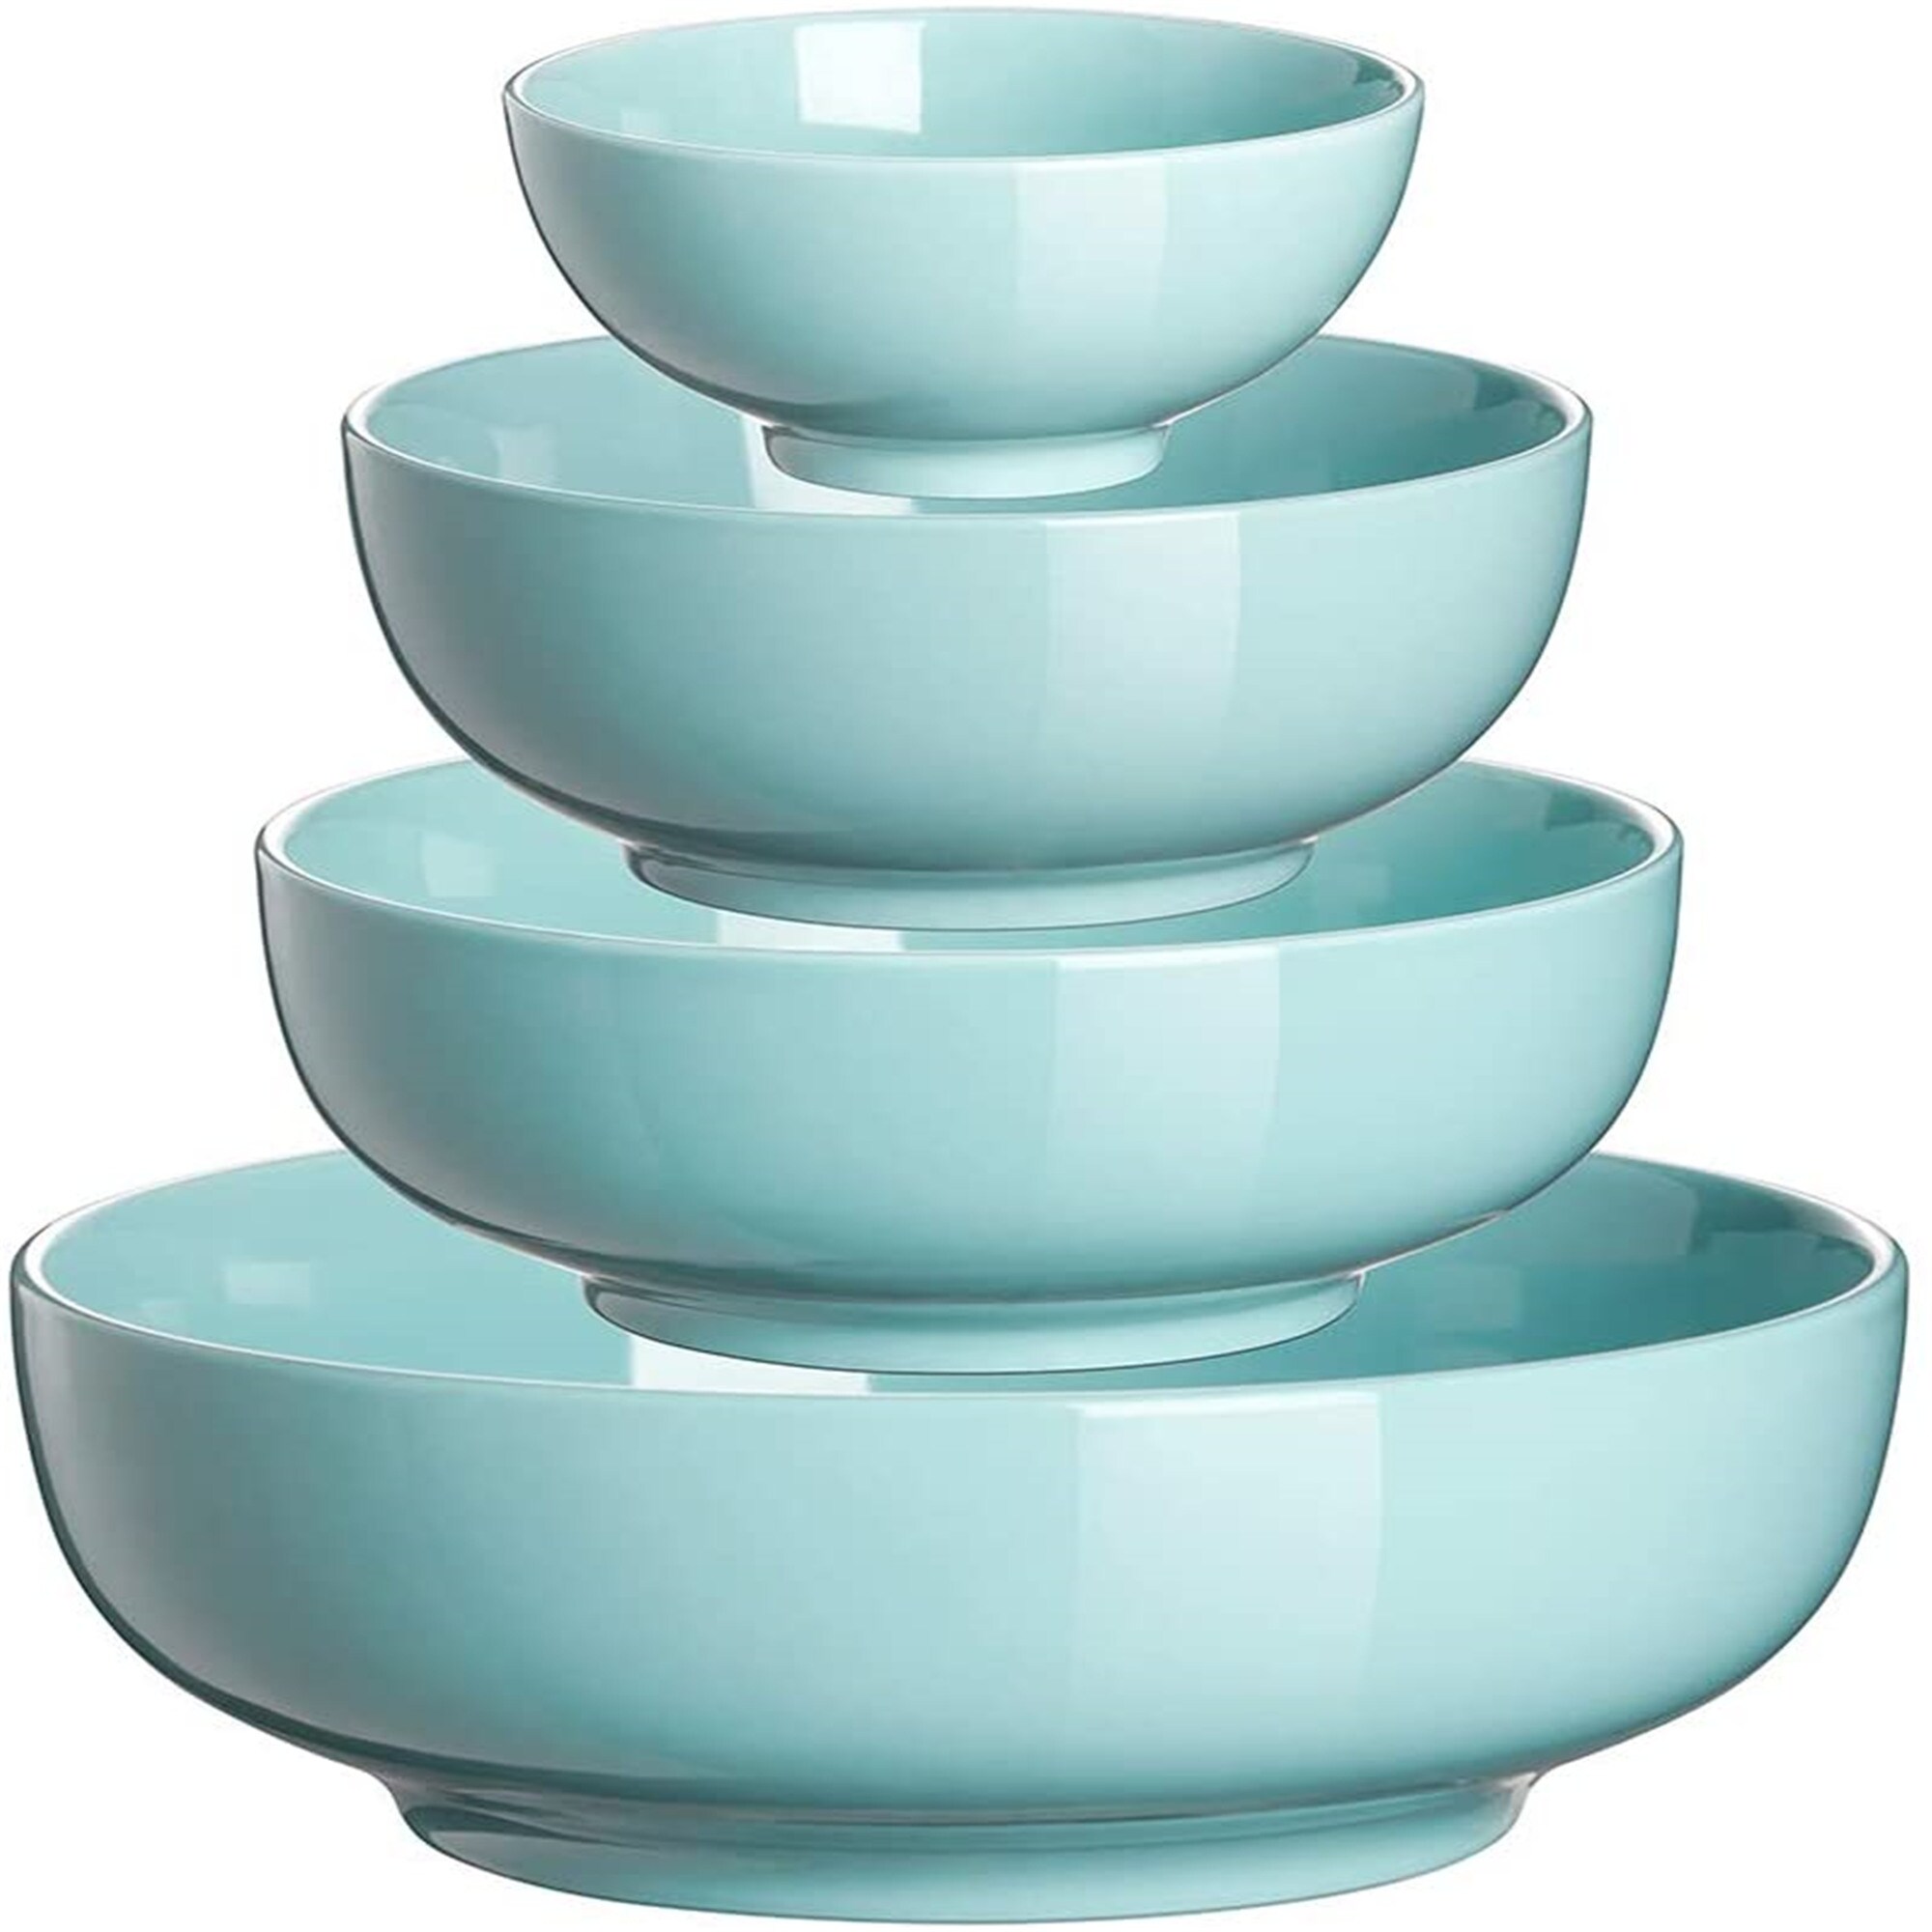 https://ak1.ostkcdn.com/images/products/is/images/direct/ae2a795148e5a210e603386236cbb99da8e4cda7/Serving-Bowl-Porcelain%2C-Ceramic-Mixing-Bowl%2C-86-36-24-8.5-Ounces-Nesting-Bowls-for-kitchen%2C-Salad-Bowl-Set-of-4.jpg